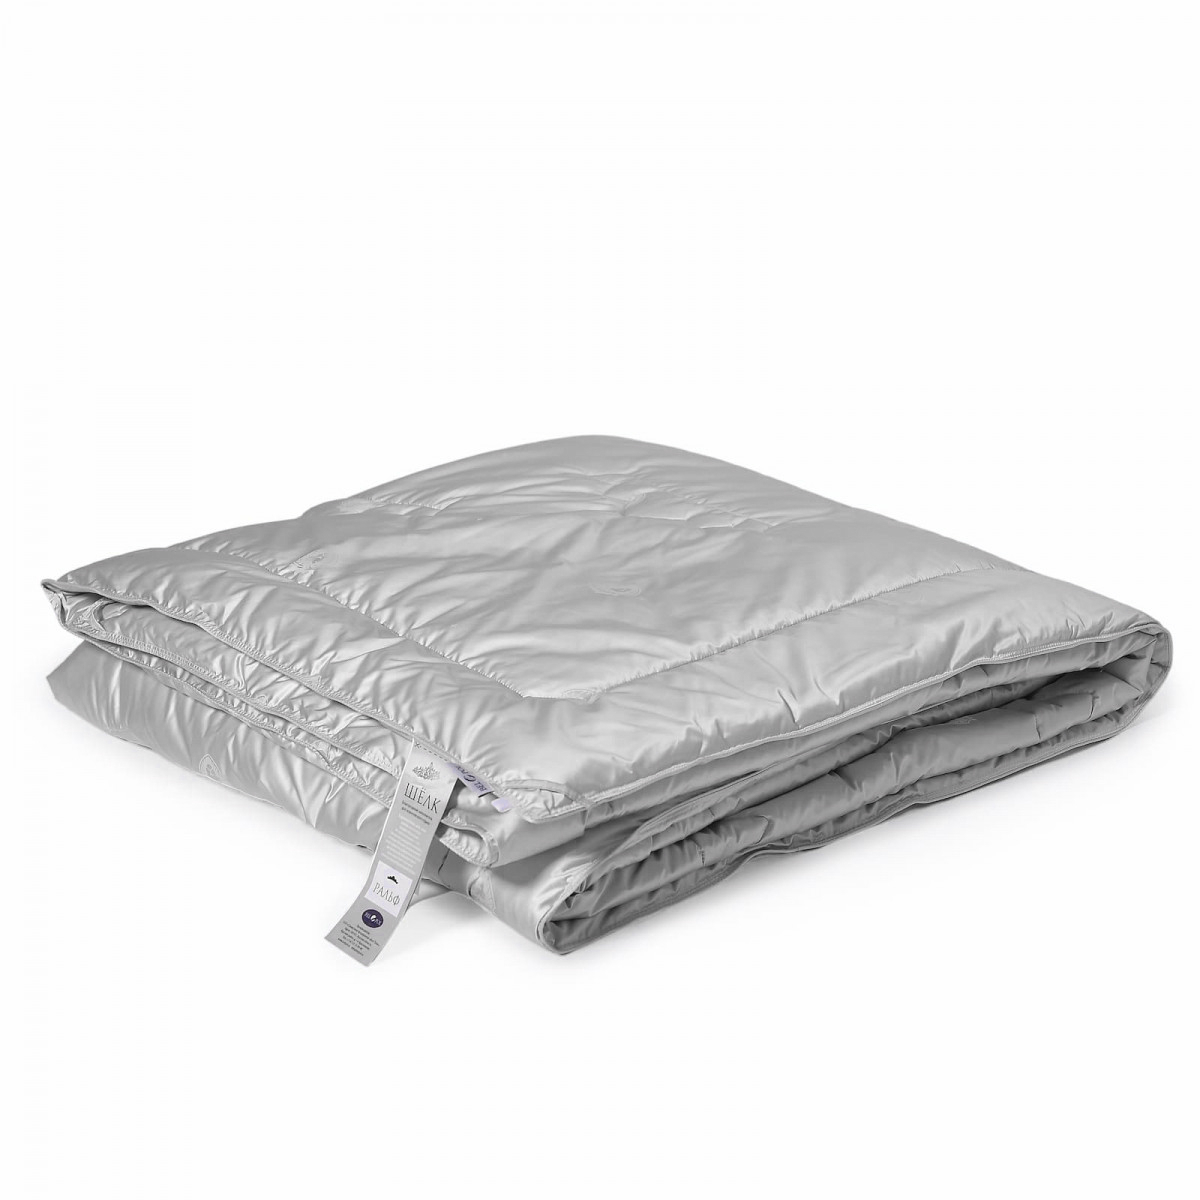 Одеяло Ральф всесезонное (140х205 см), размер 140х205 см bp765700 Одеяло Ральф всесезонное (140х205 см) - фото 1